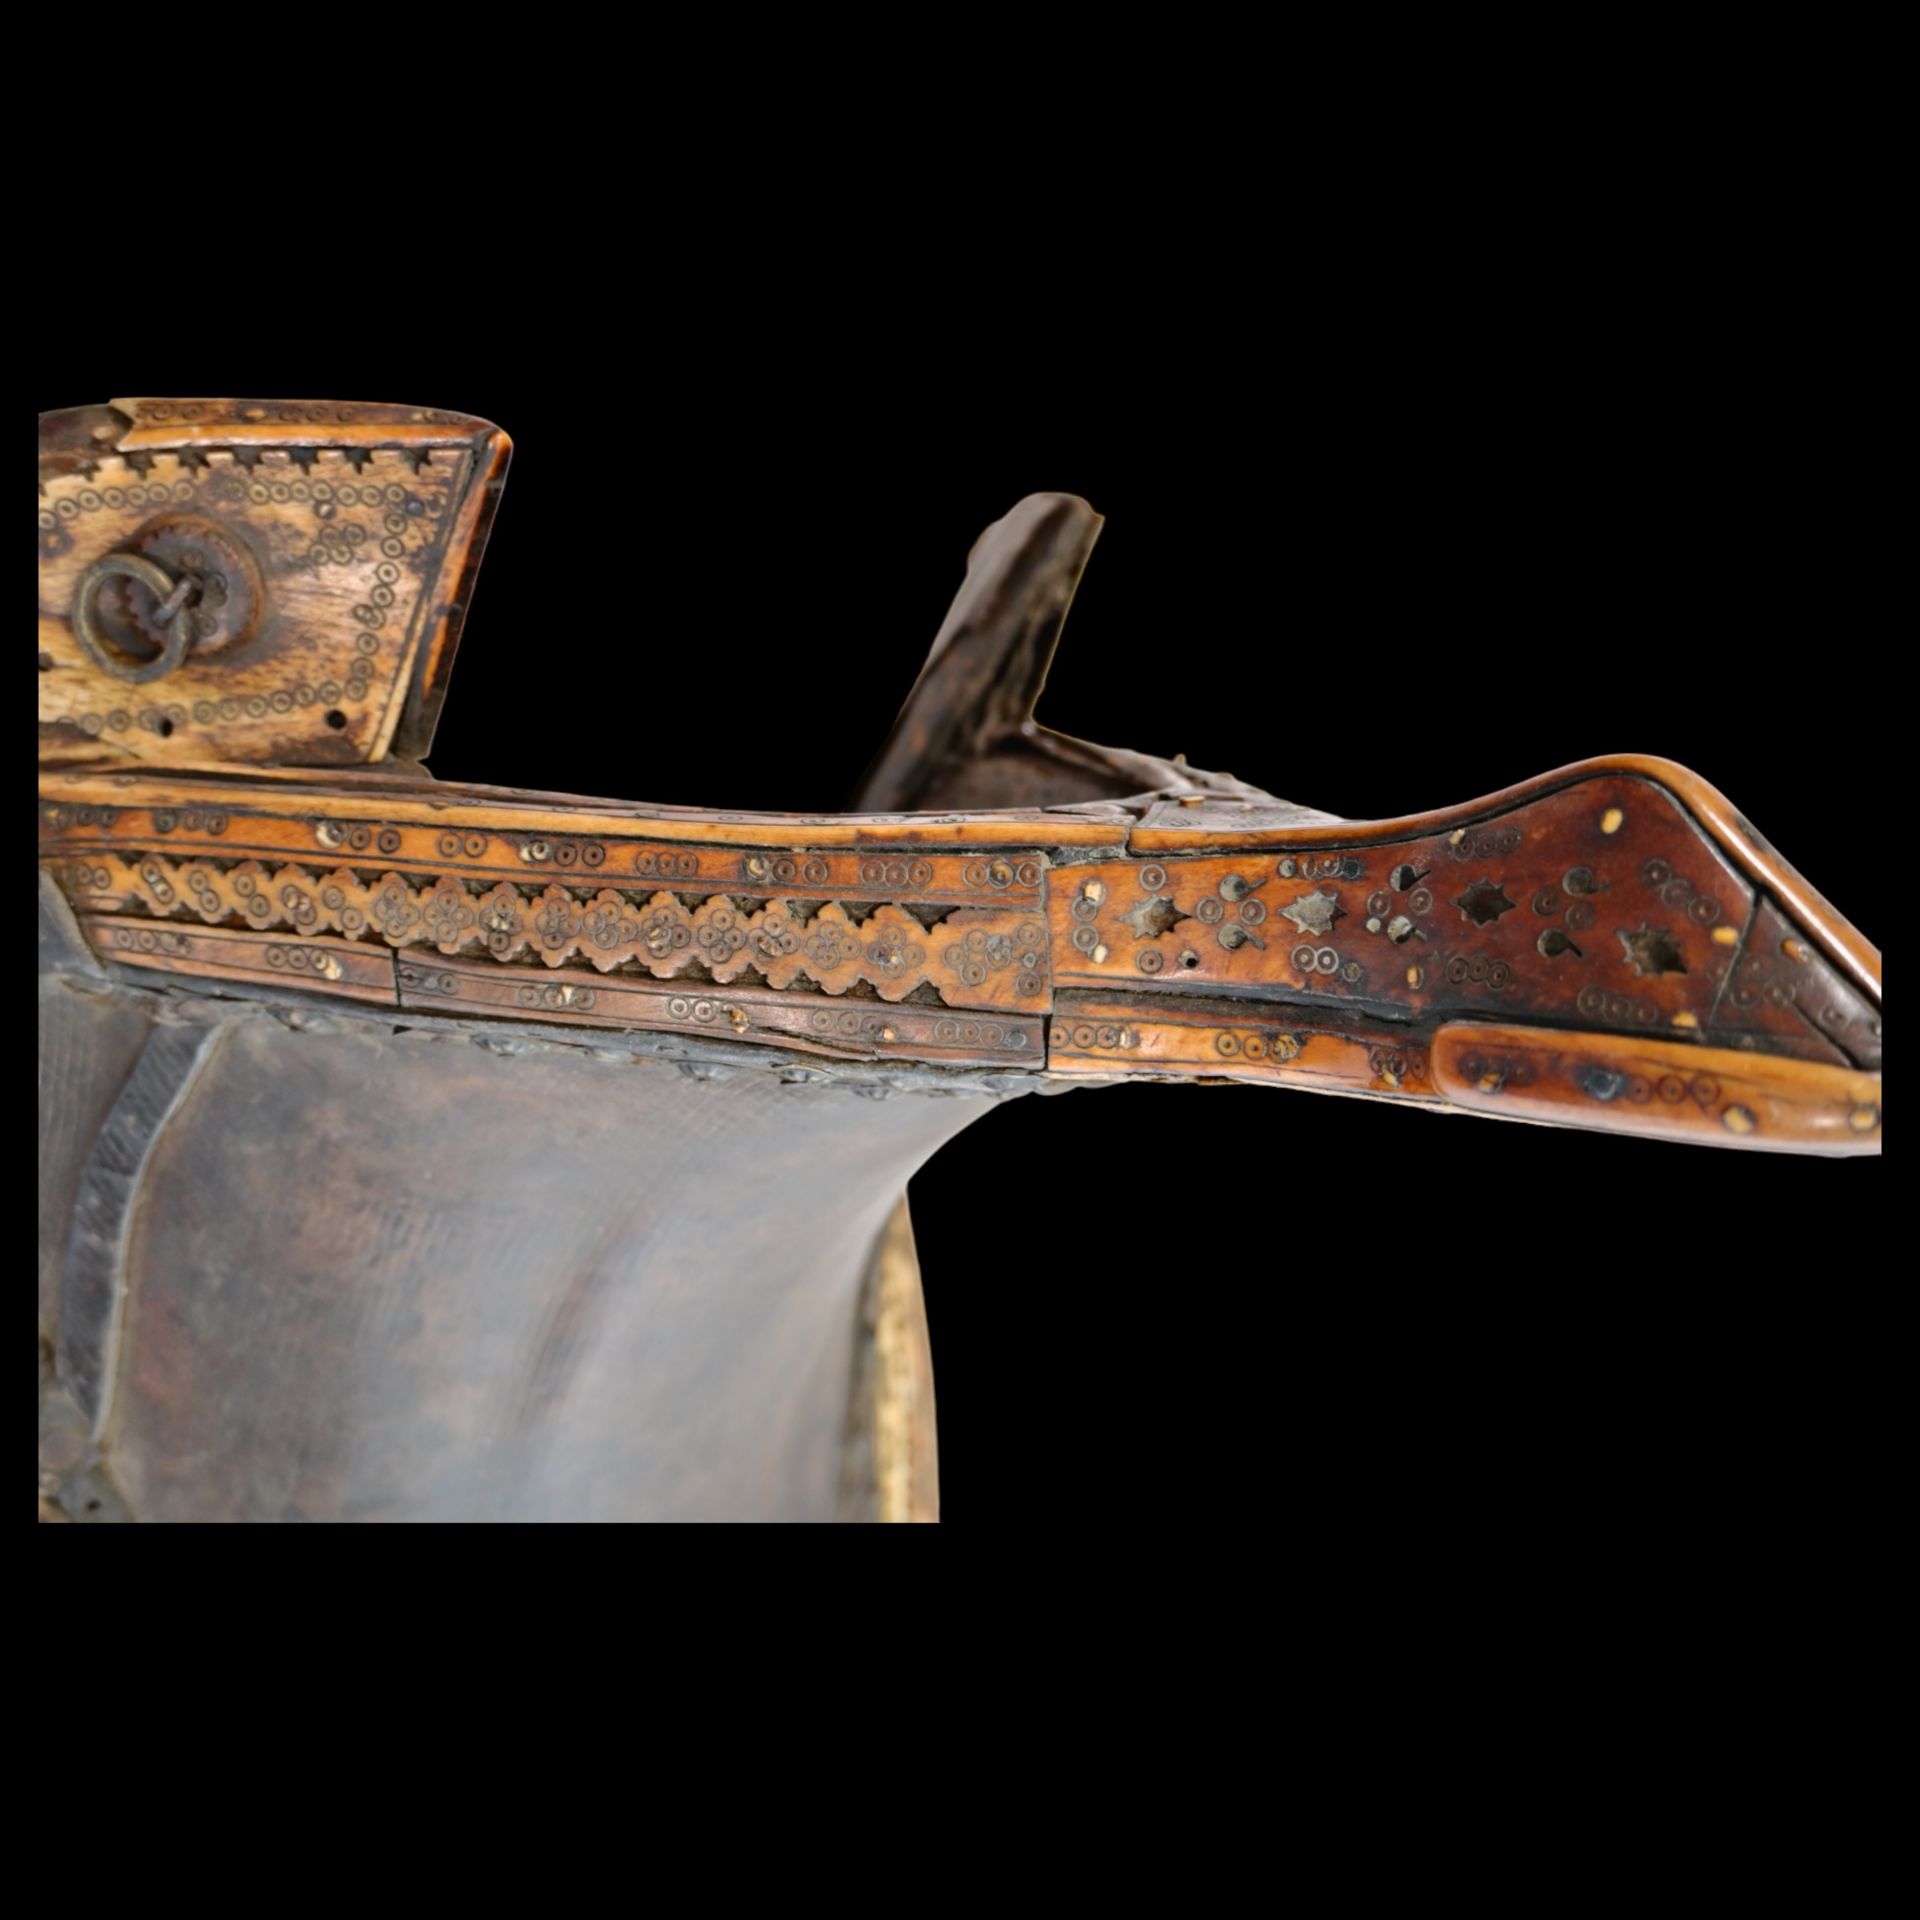 Rare antique Islamic Ottoman, Persian or Central Asia saddle for horseback, 18th century. - Image 9 of 12